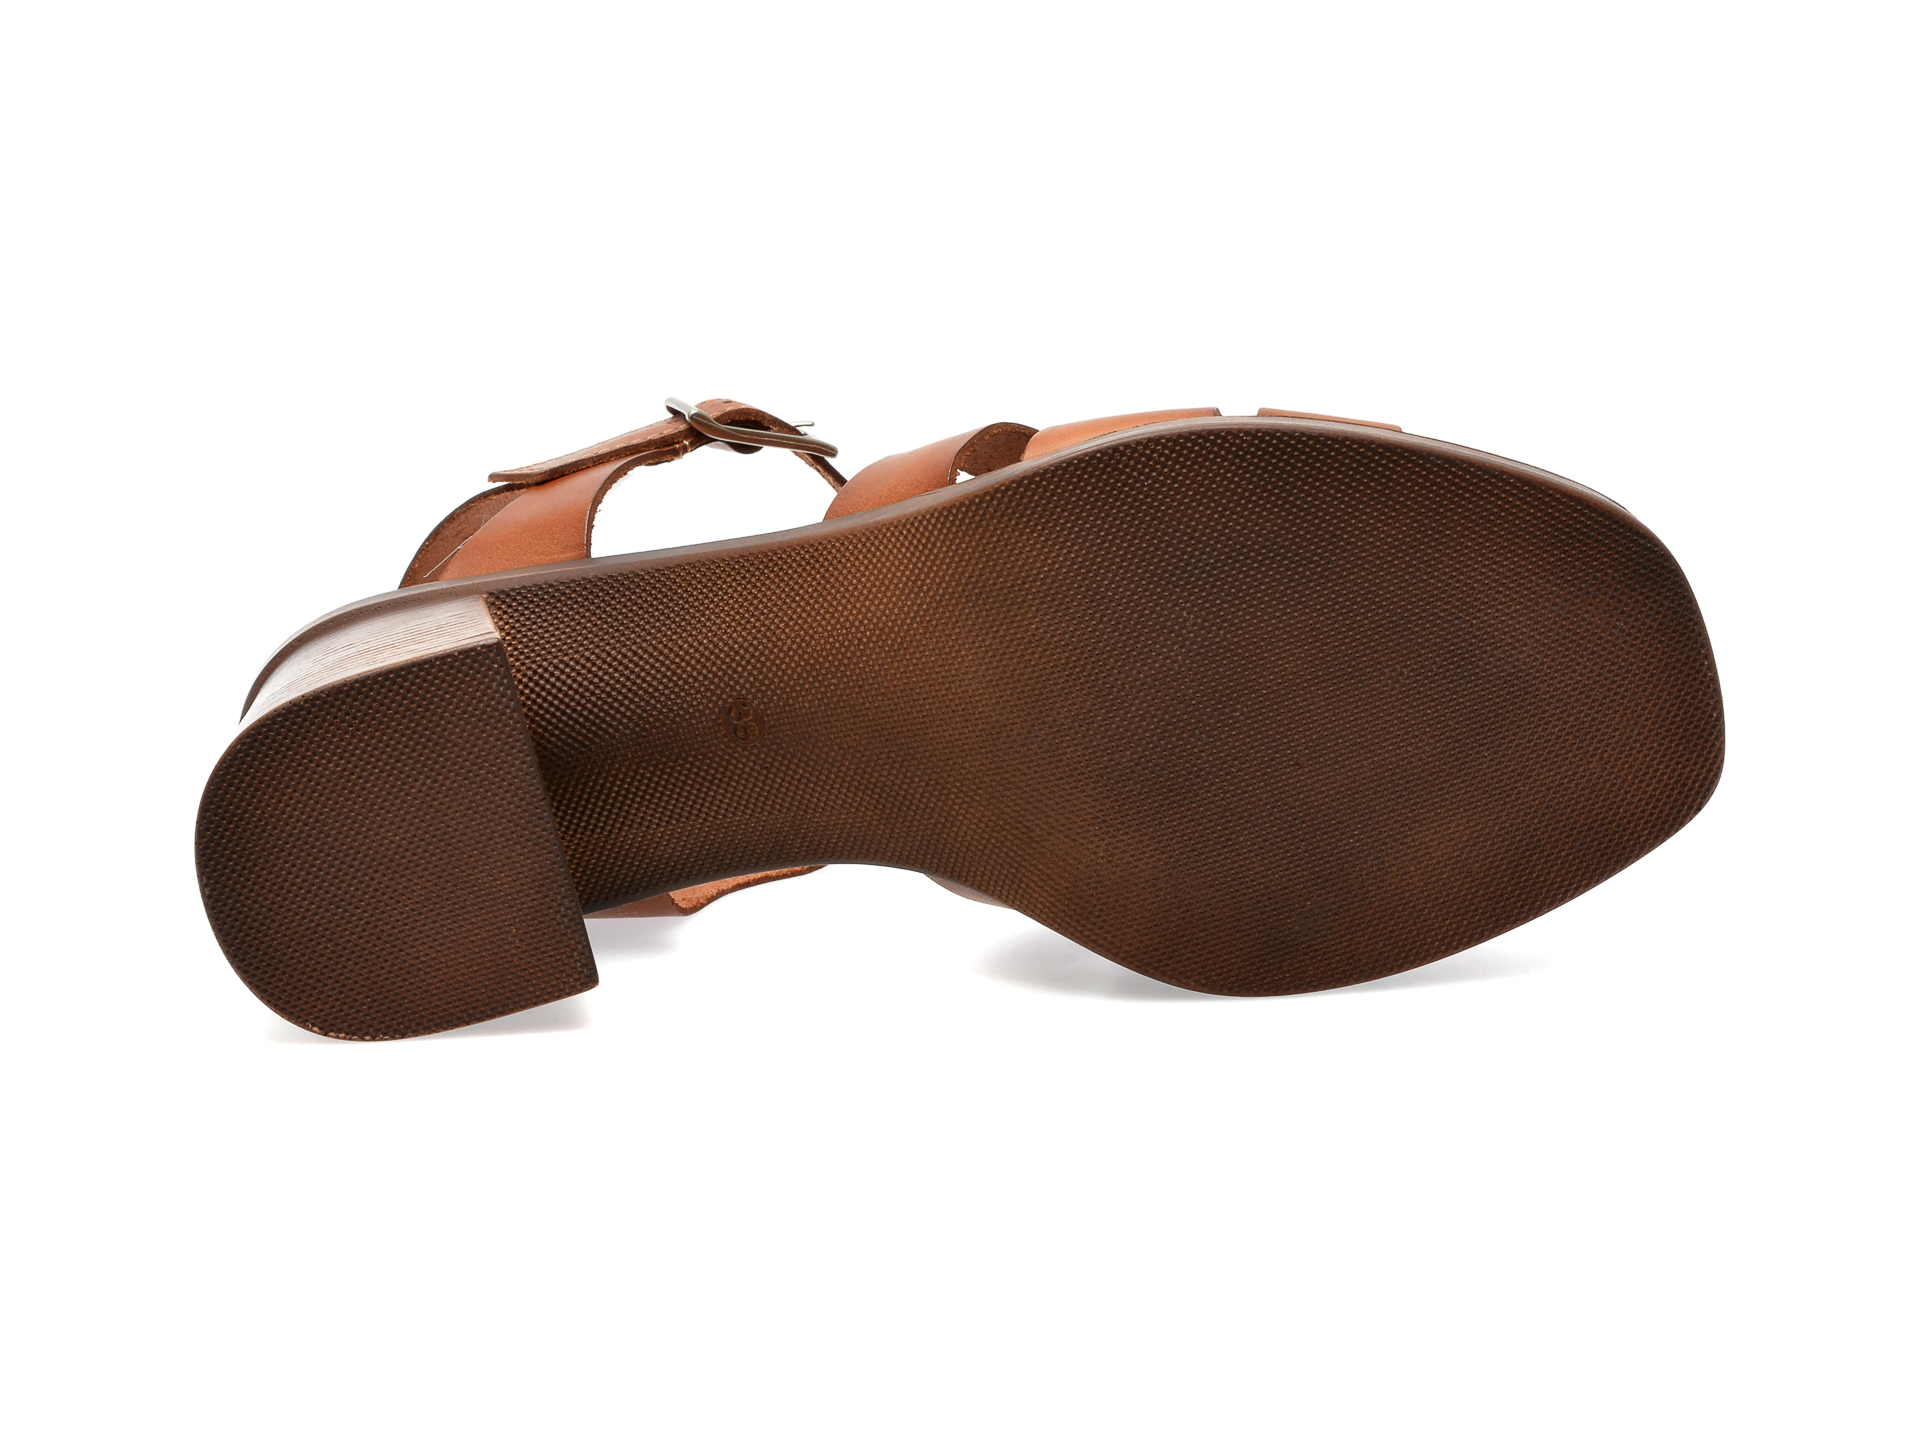 Sandale IMAGE maro, ENGRACI, din piele naturala